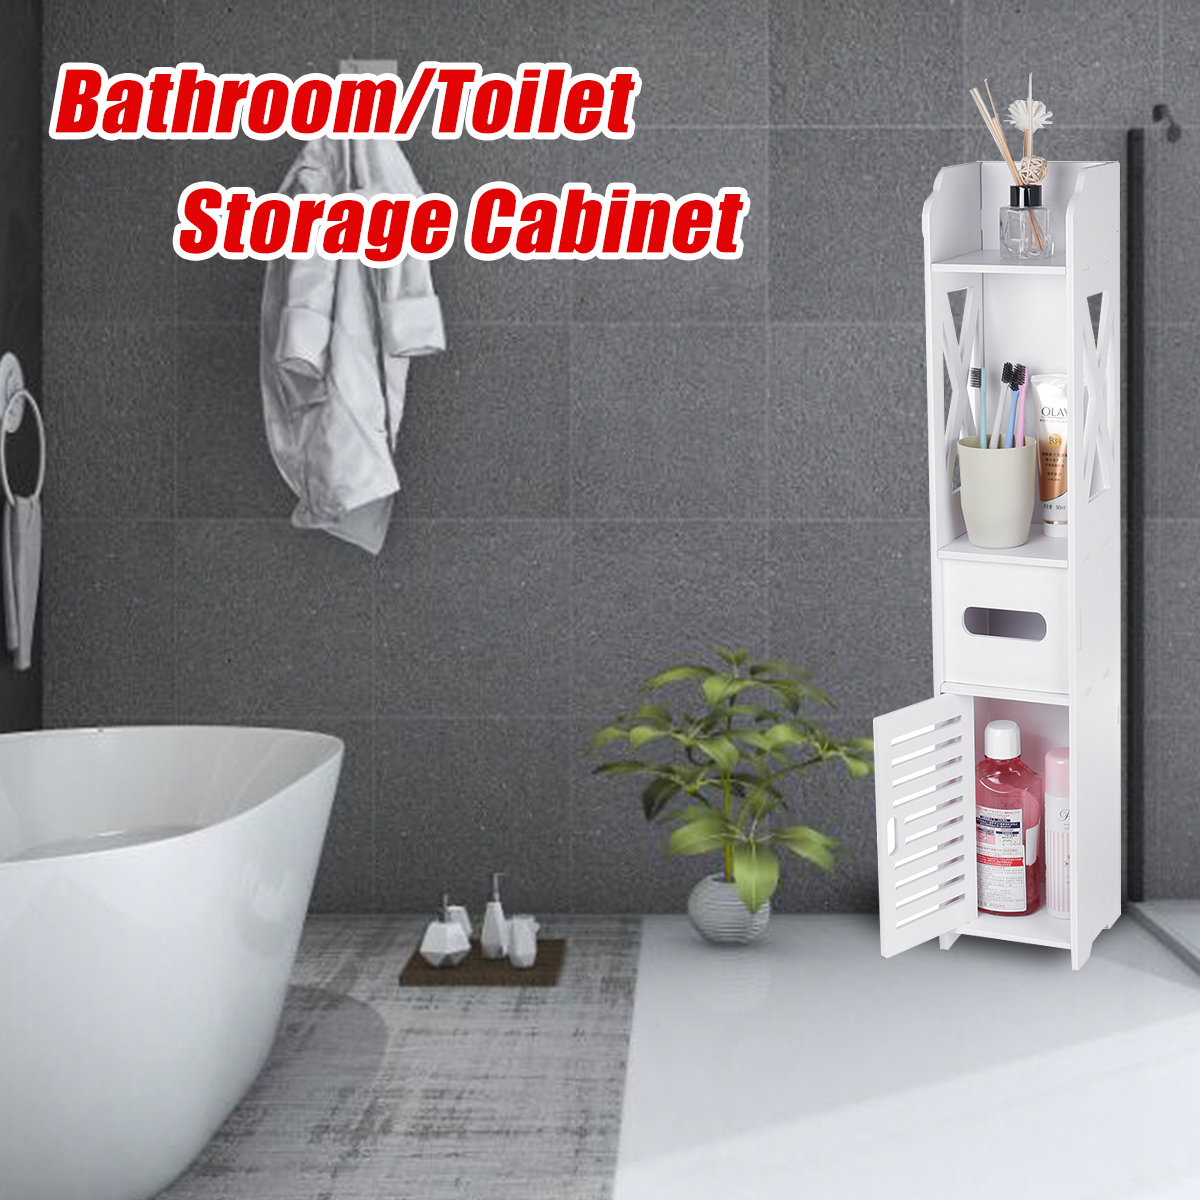 Small-Bathroom-Toilet-Storage-Cabinet-Waterproof-Organizer-Standing-Rack-Shelf-1779556-5